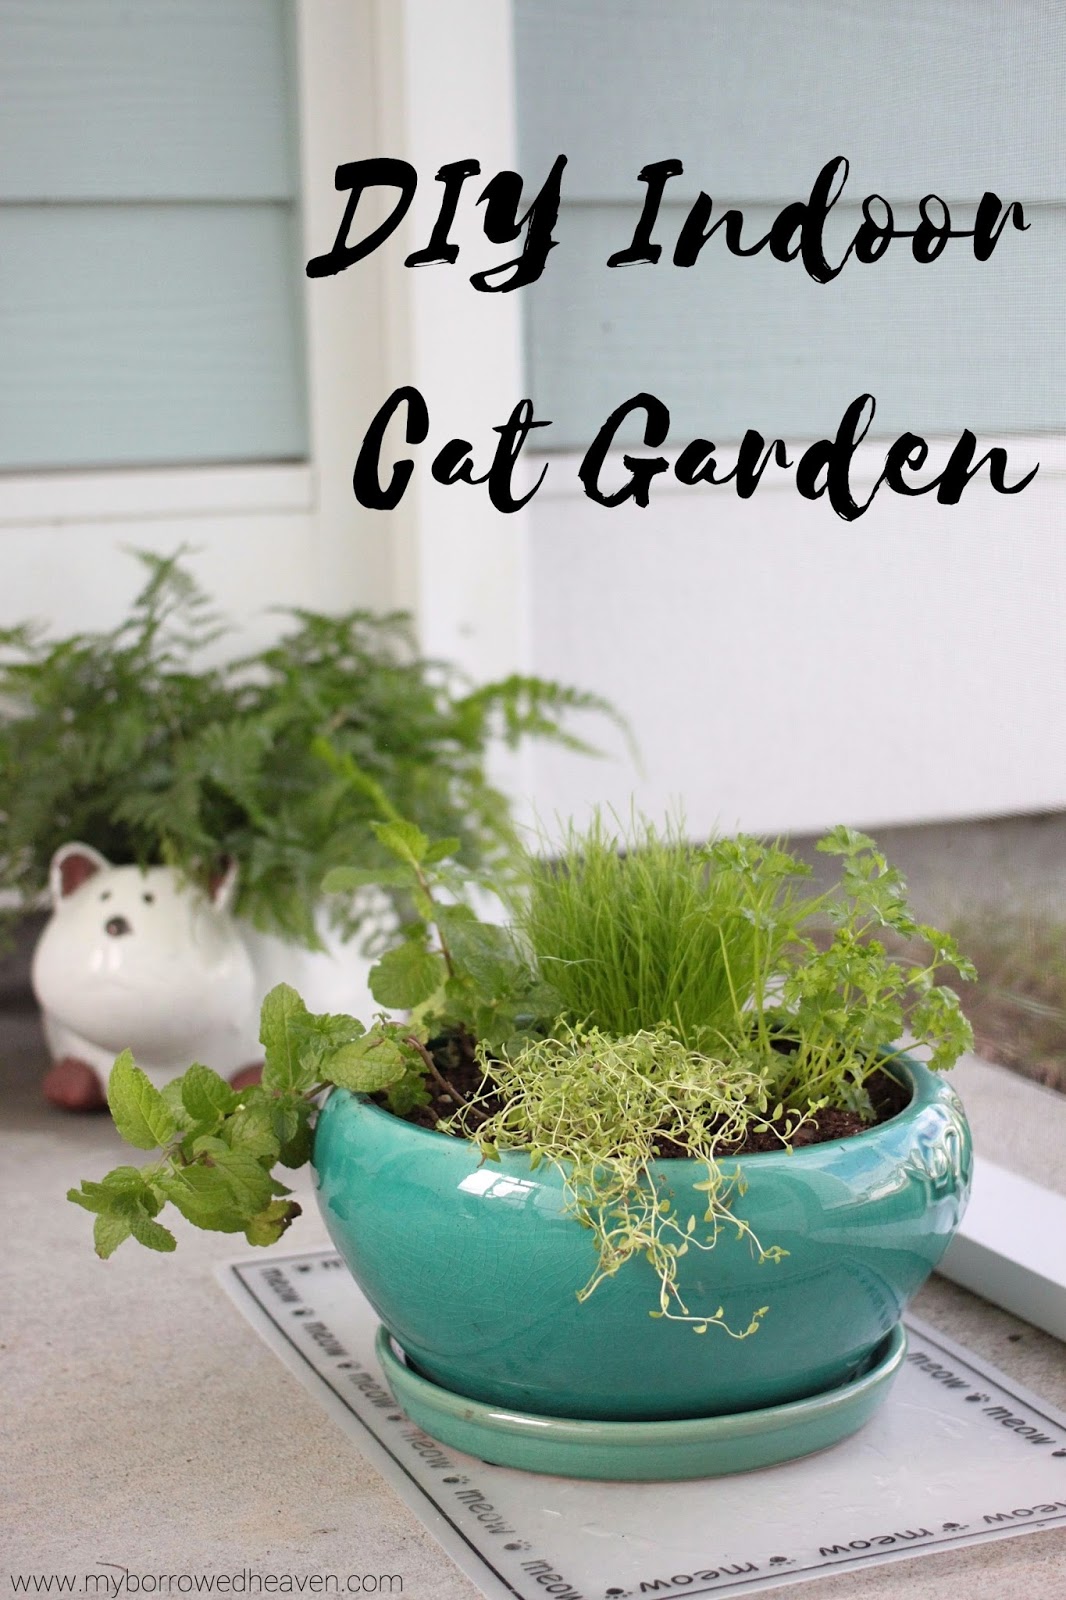 DIY Catnip Planter: A Gardening Project for Beginners - Platt Hill Nursery  - Blog & Advice